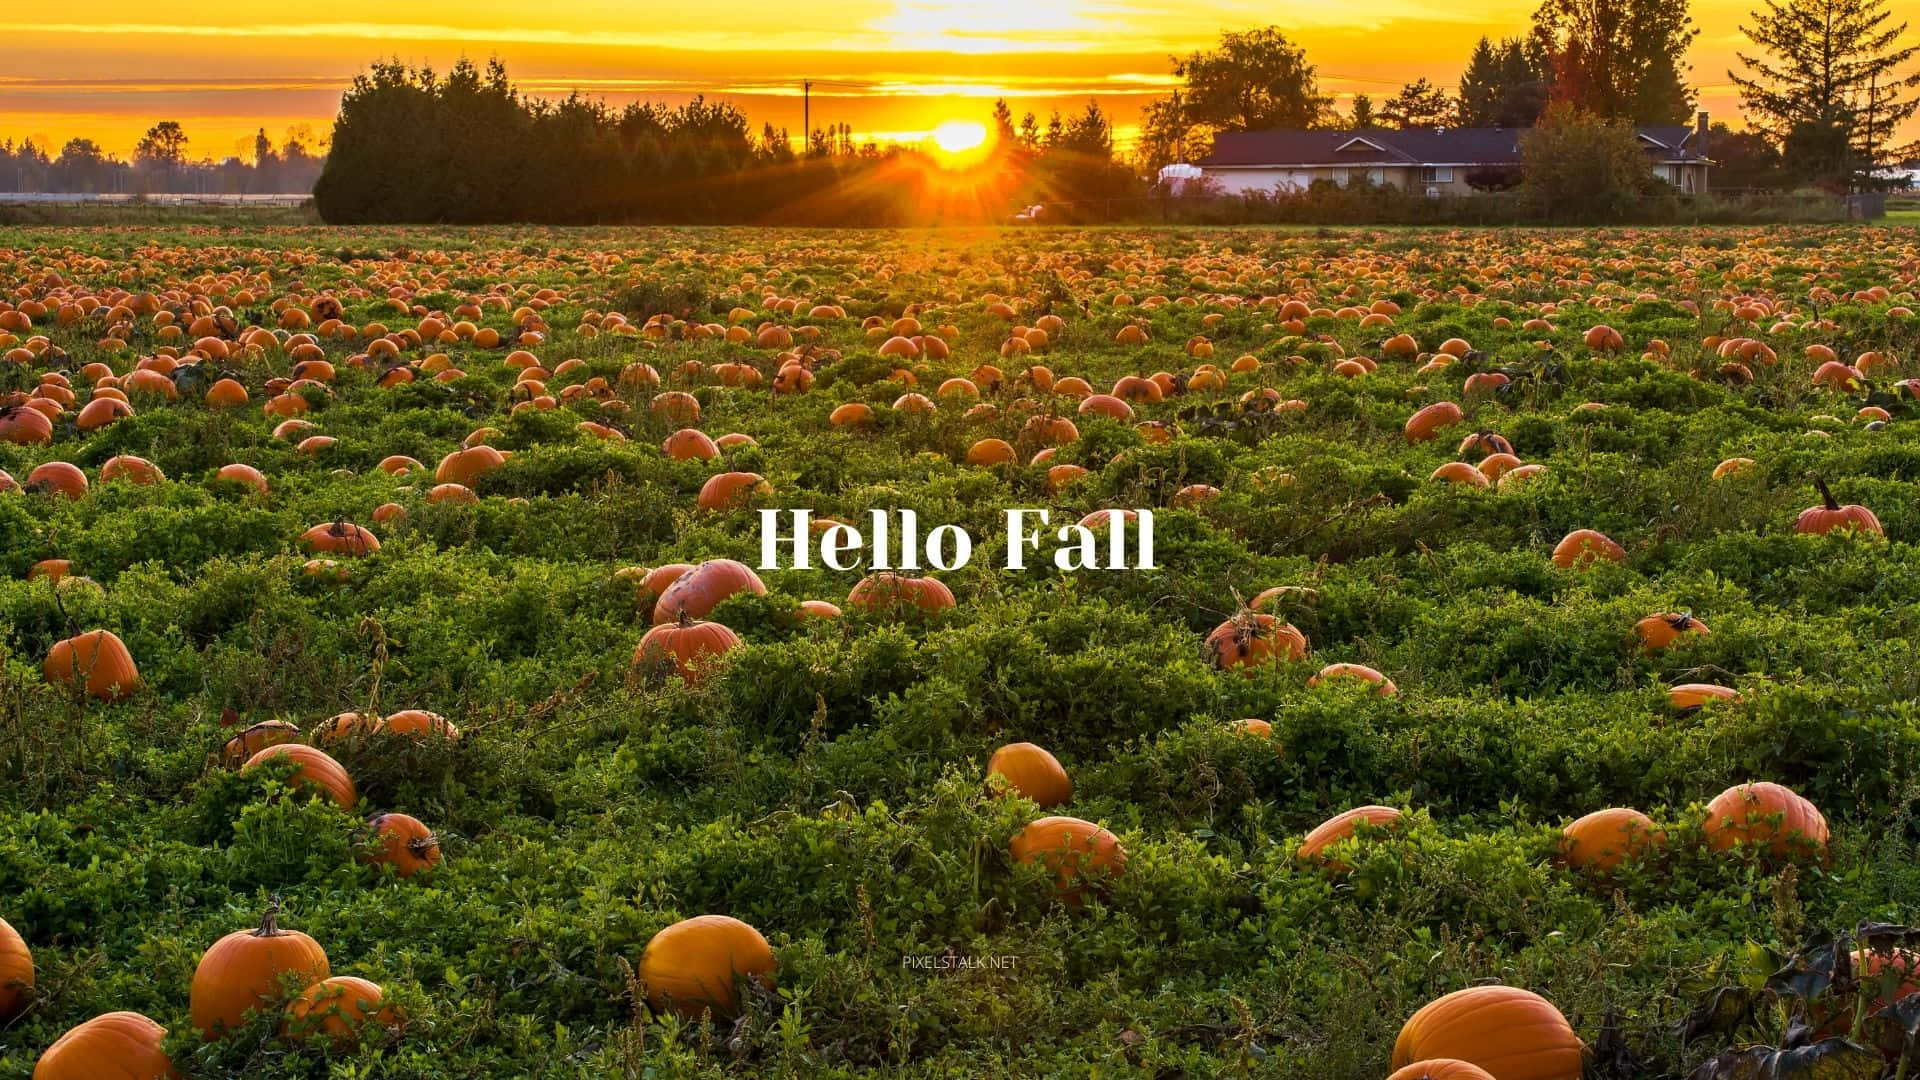 Hello Fall Pumpkin Field Wallpaper